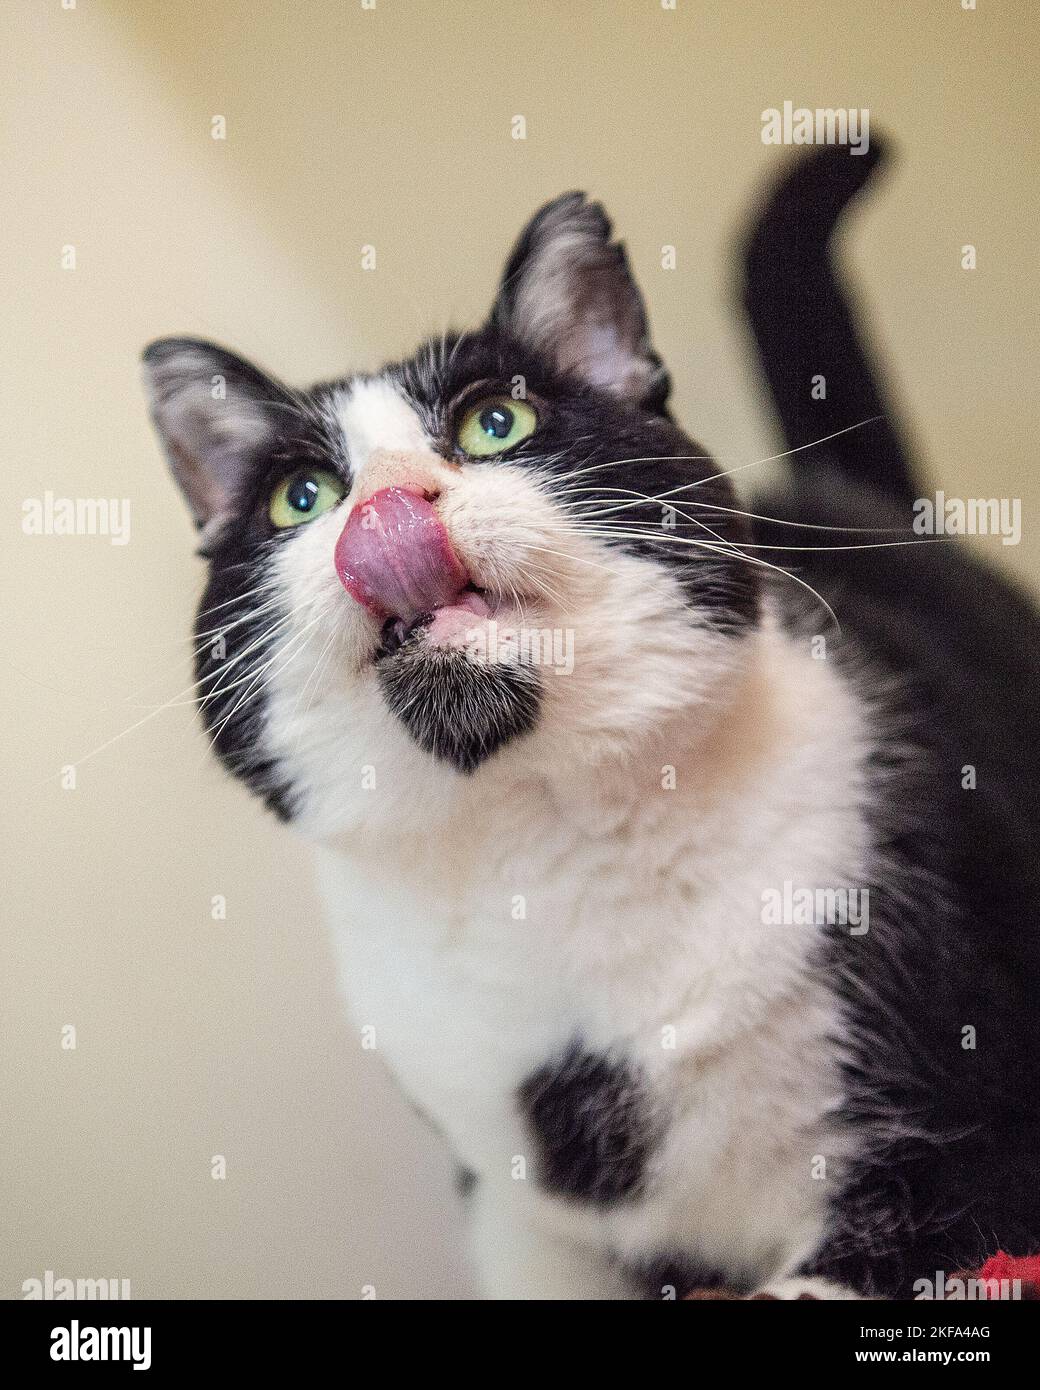 cat licking lips Stock Photo